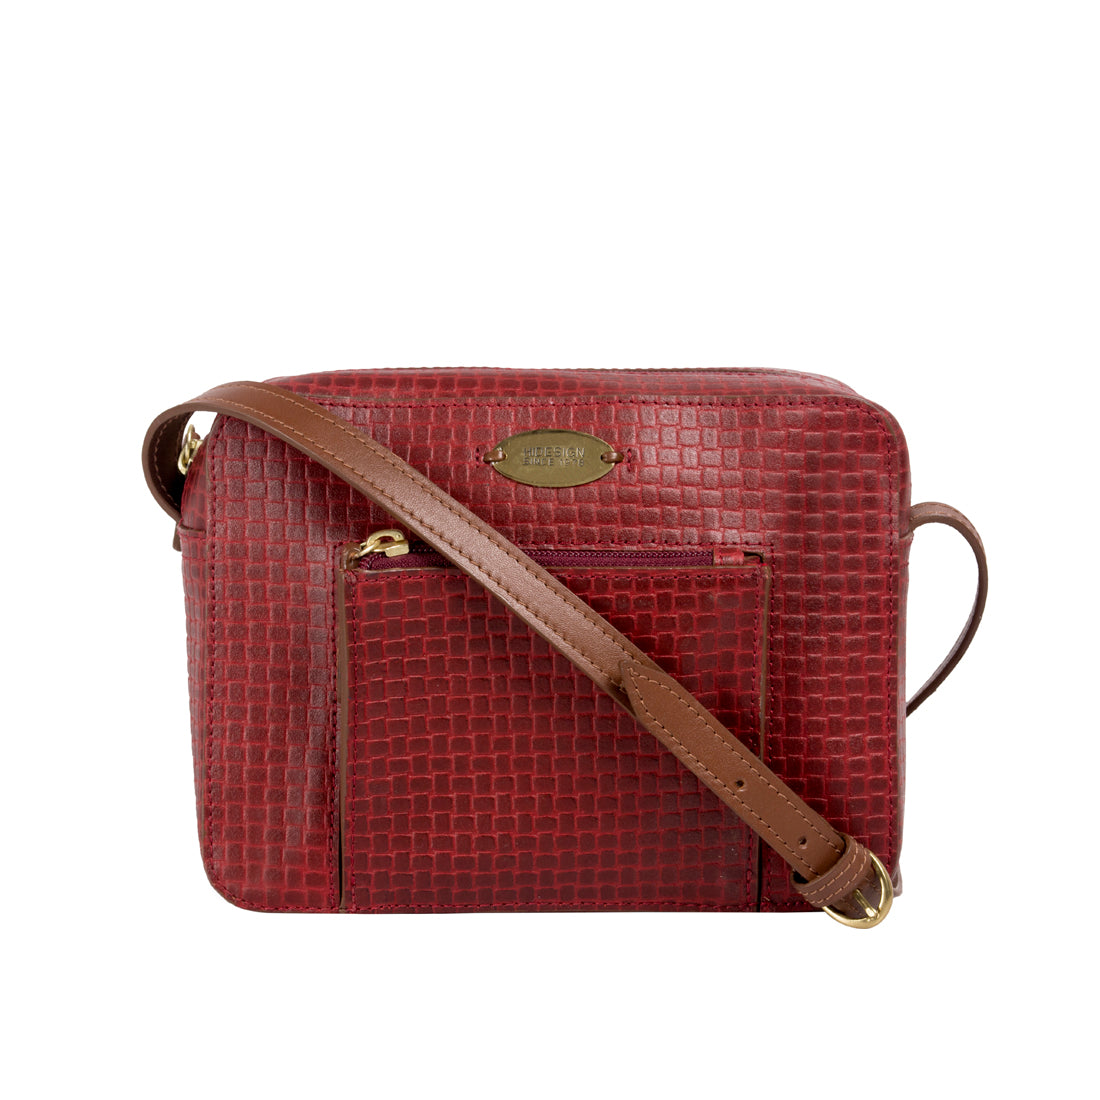 Celine Luggage Tote | Bags, Handbag, Prada handbags